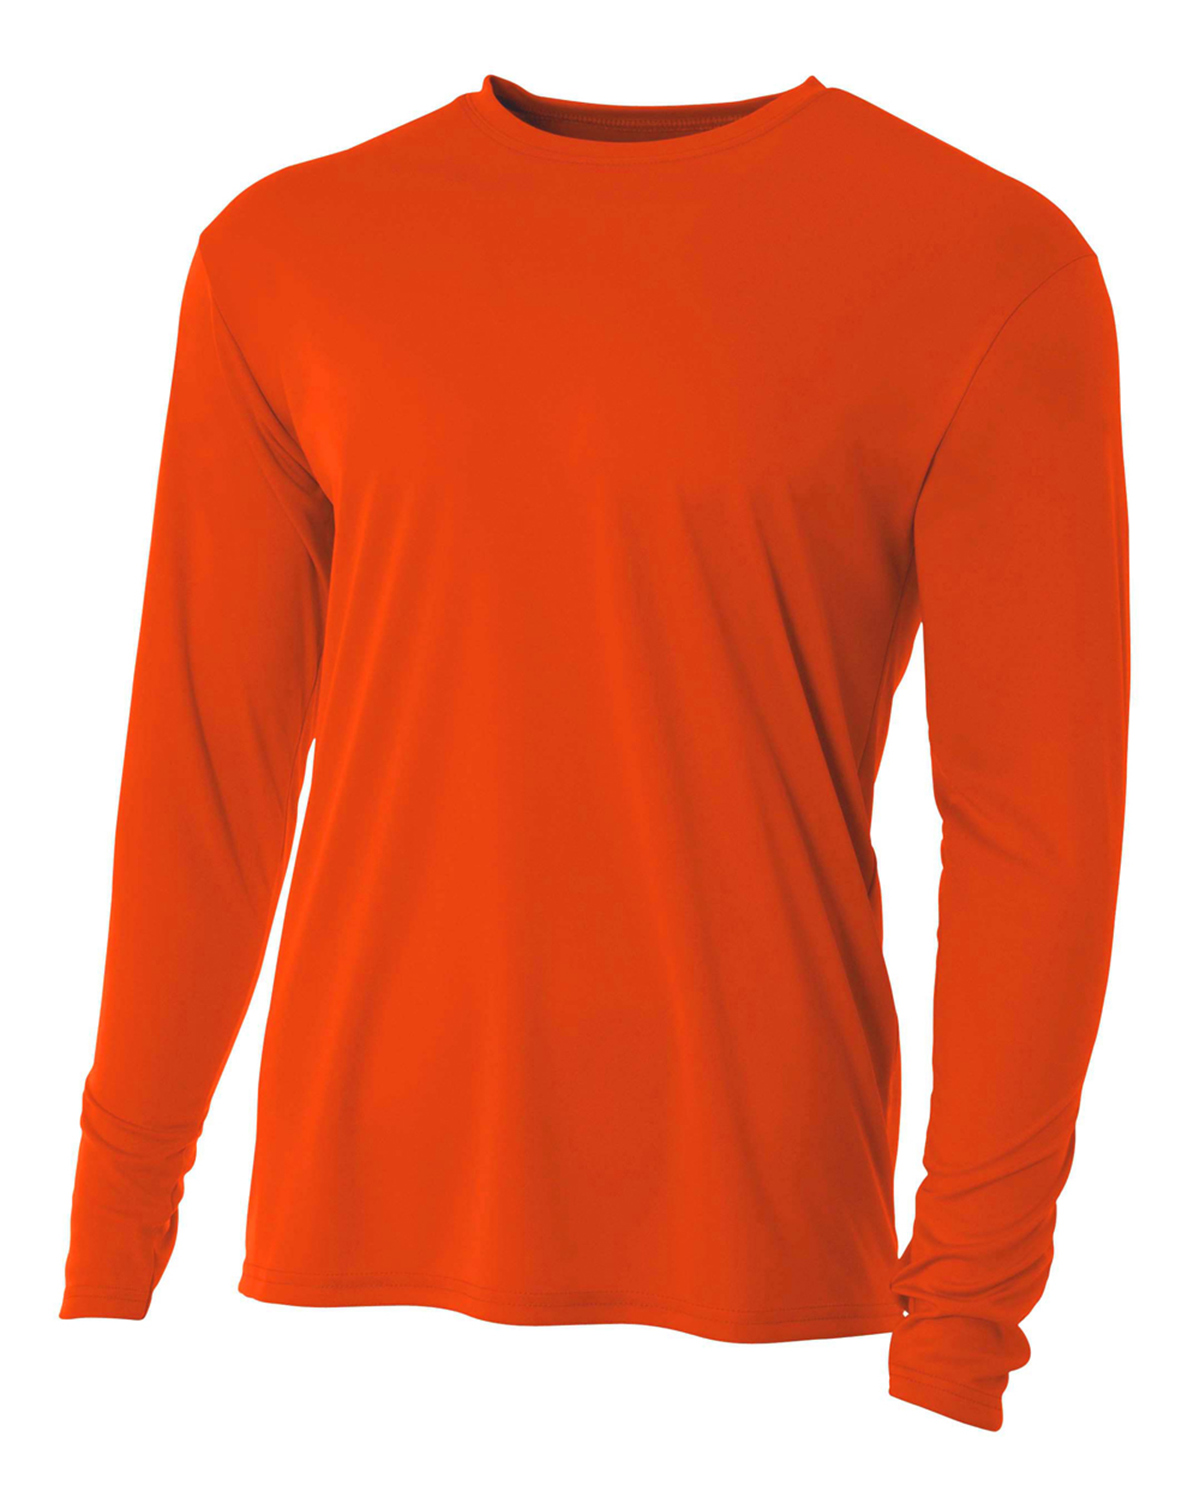 A4 N3165 Men's Cooling Performance Long Sleeve T-Shirt, Athletic Orange